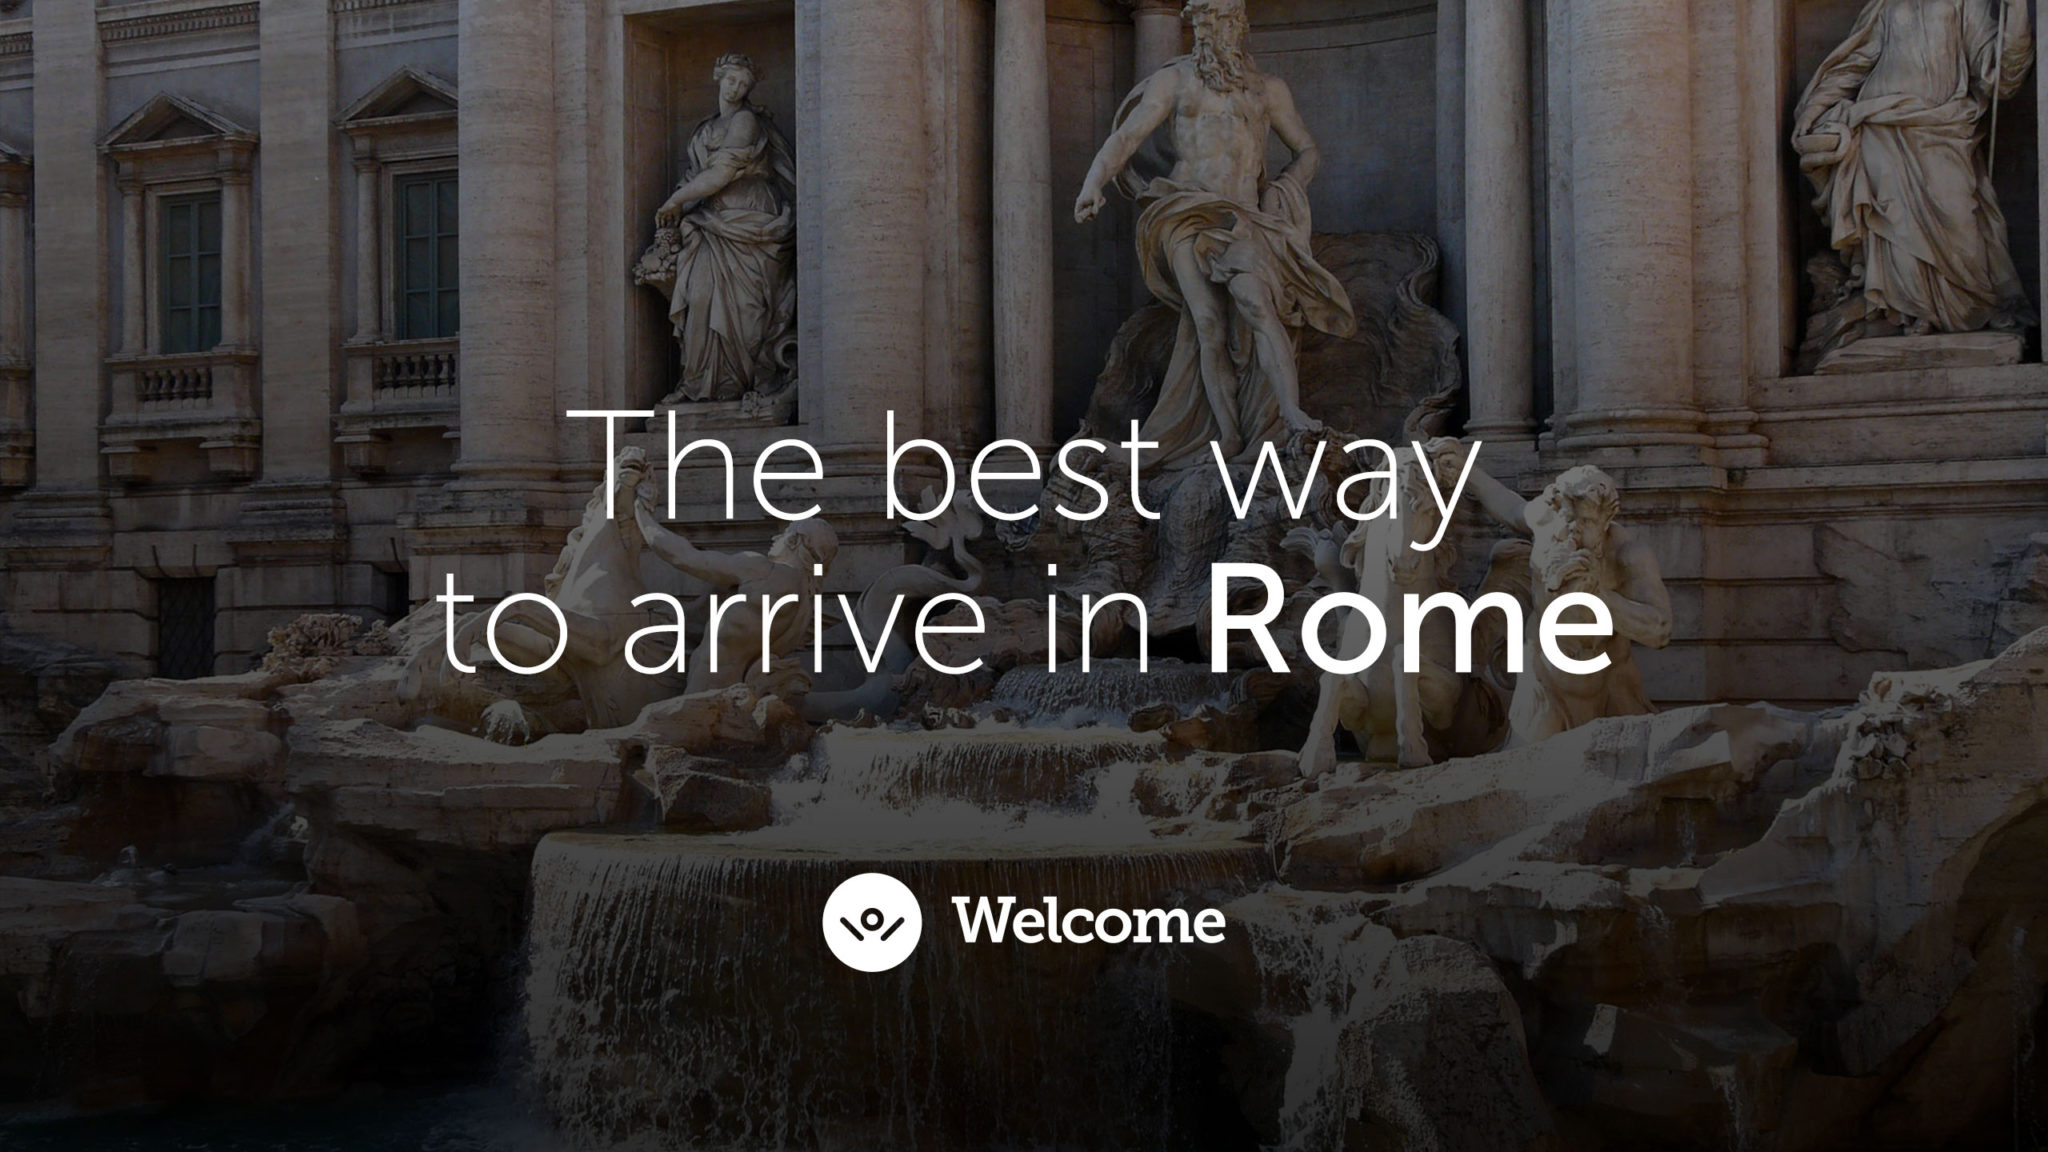 We arrive in rome. Добро пожаловать в Рим. To arrive at Rome.